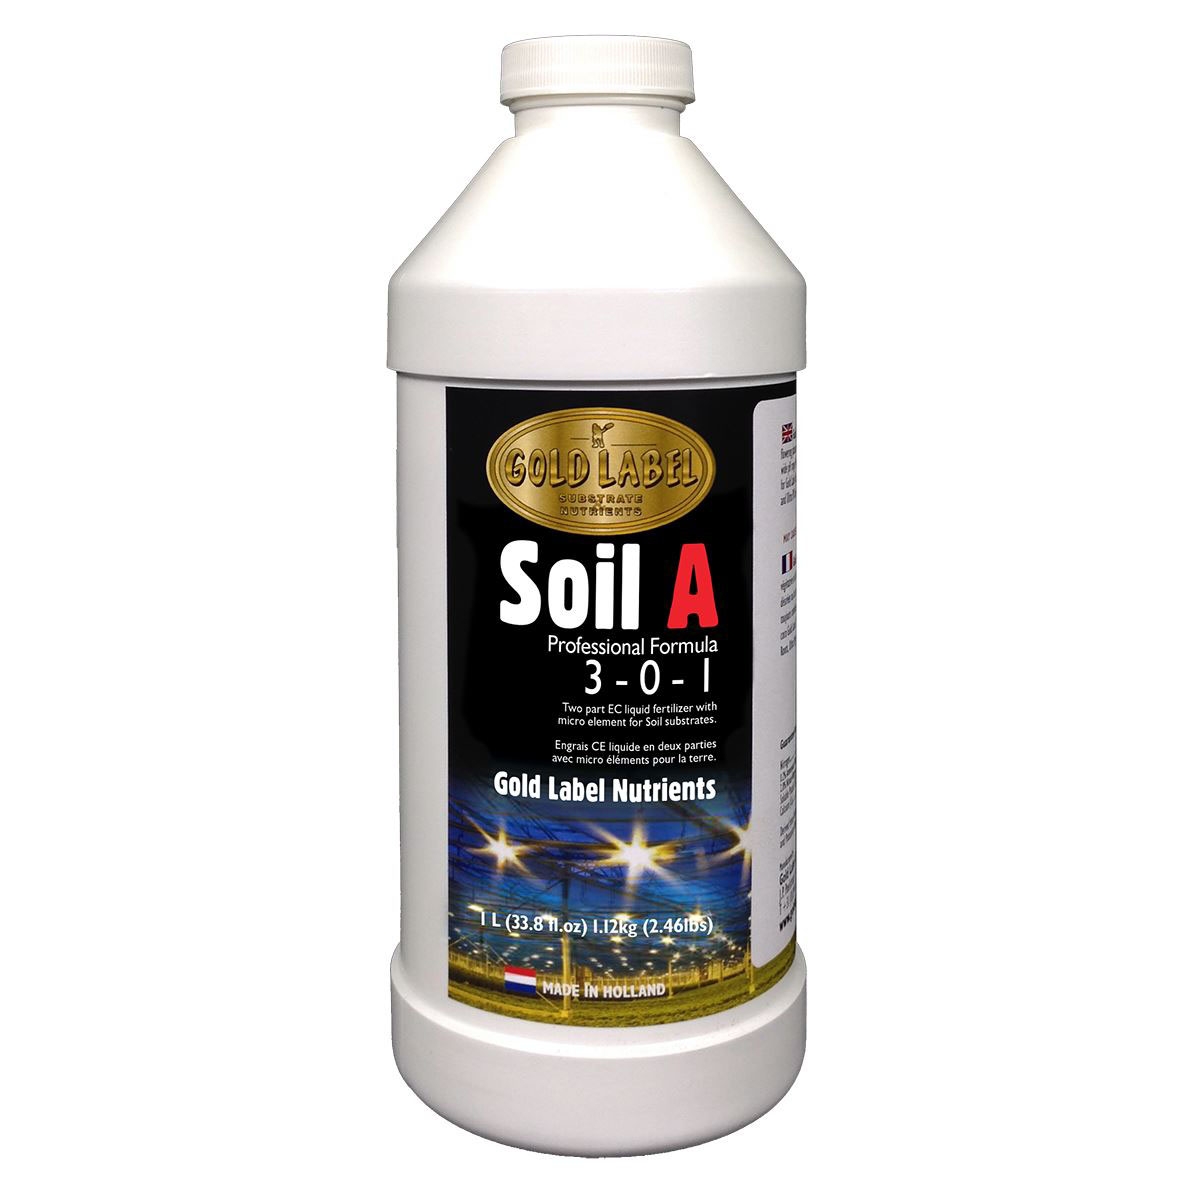 Soil A by Gold Label